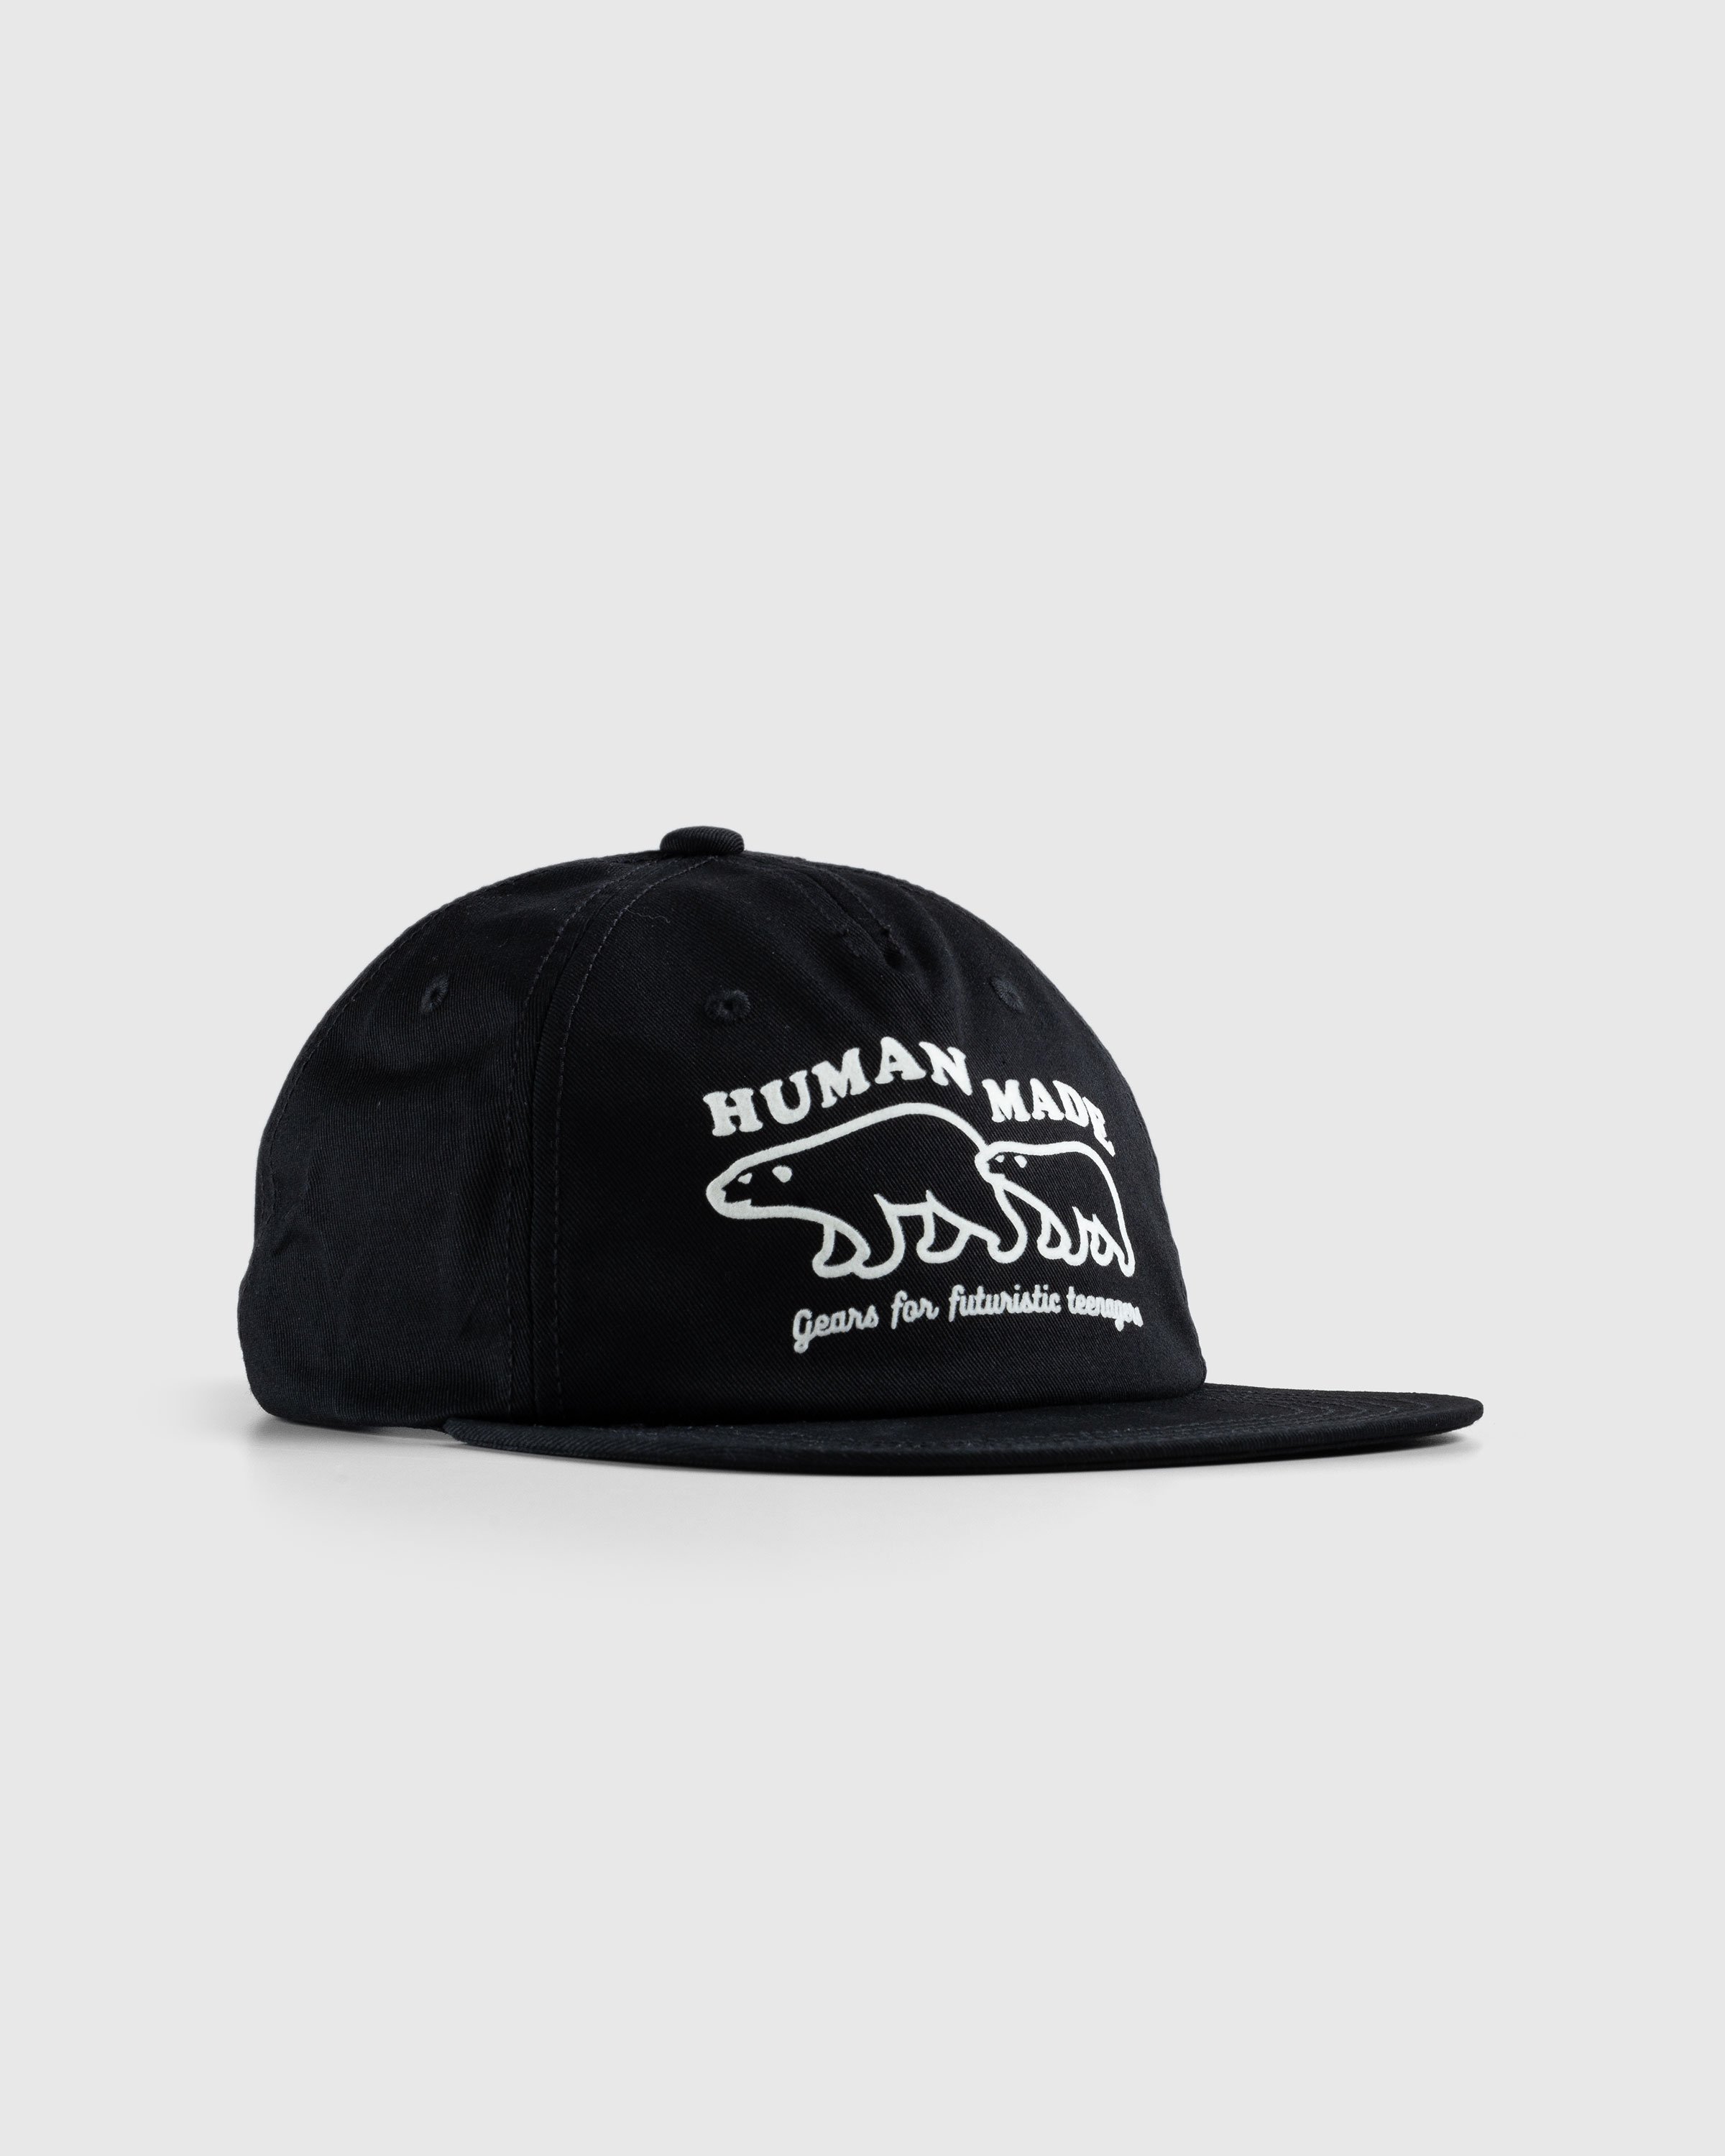 Human Made - 5 PANEL CAP #2 Black - Accessories - Black - Image 1